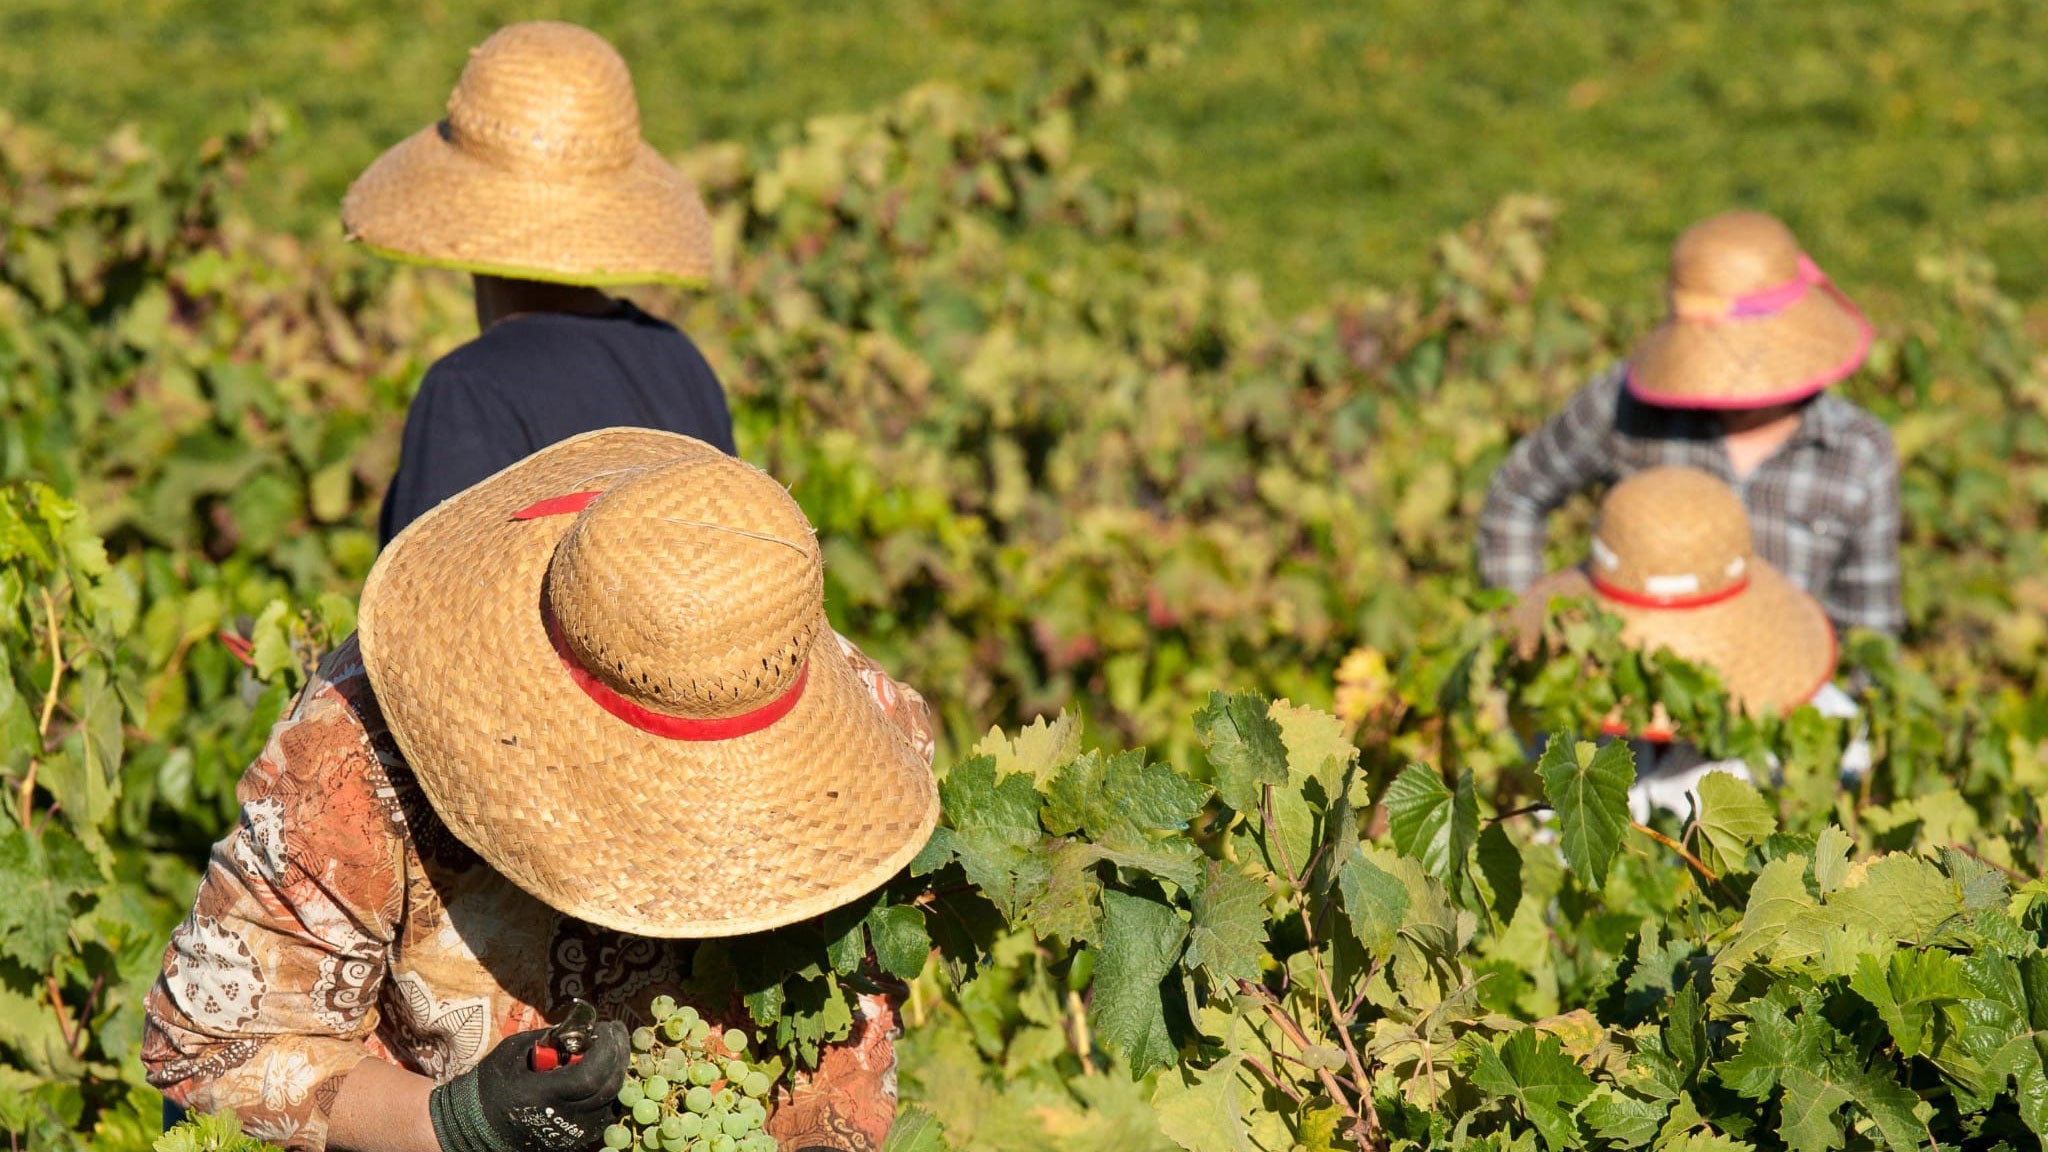 Harvesting grapes at the Spanish wine producer Barbadillo